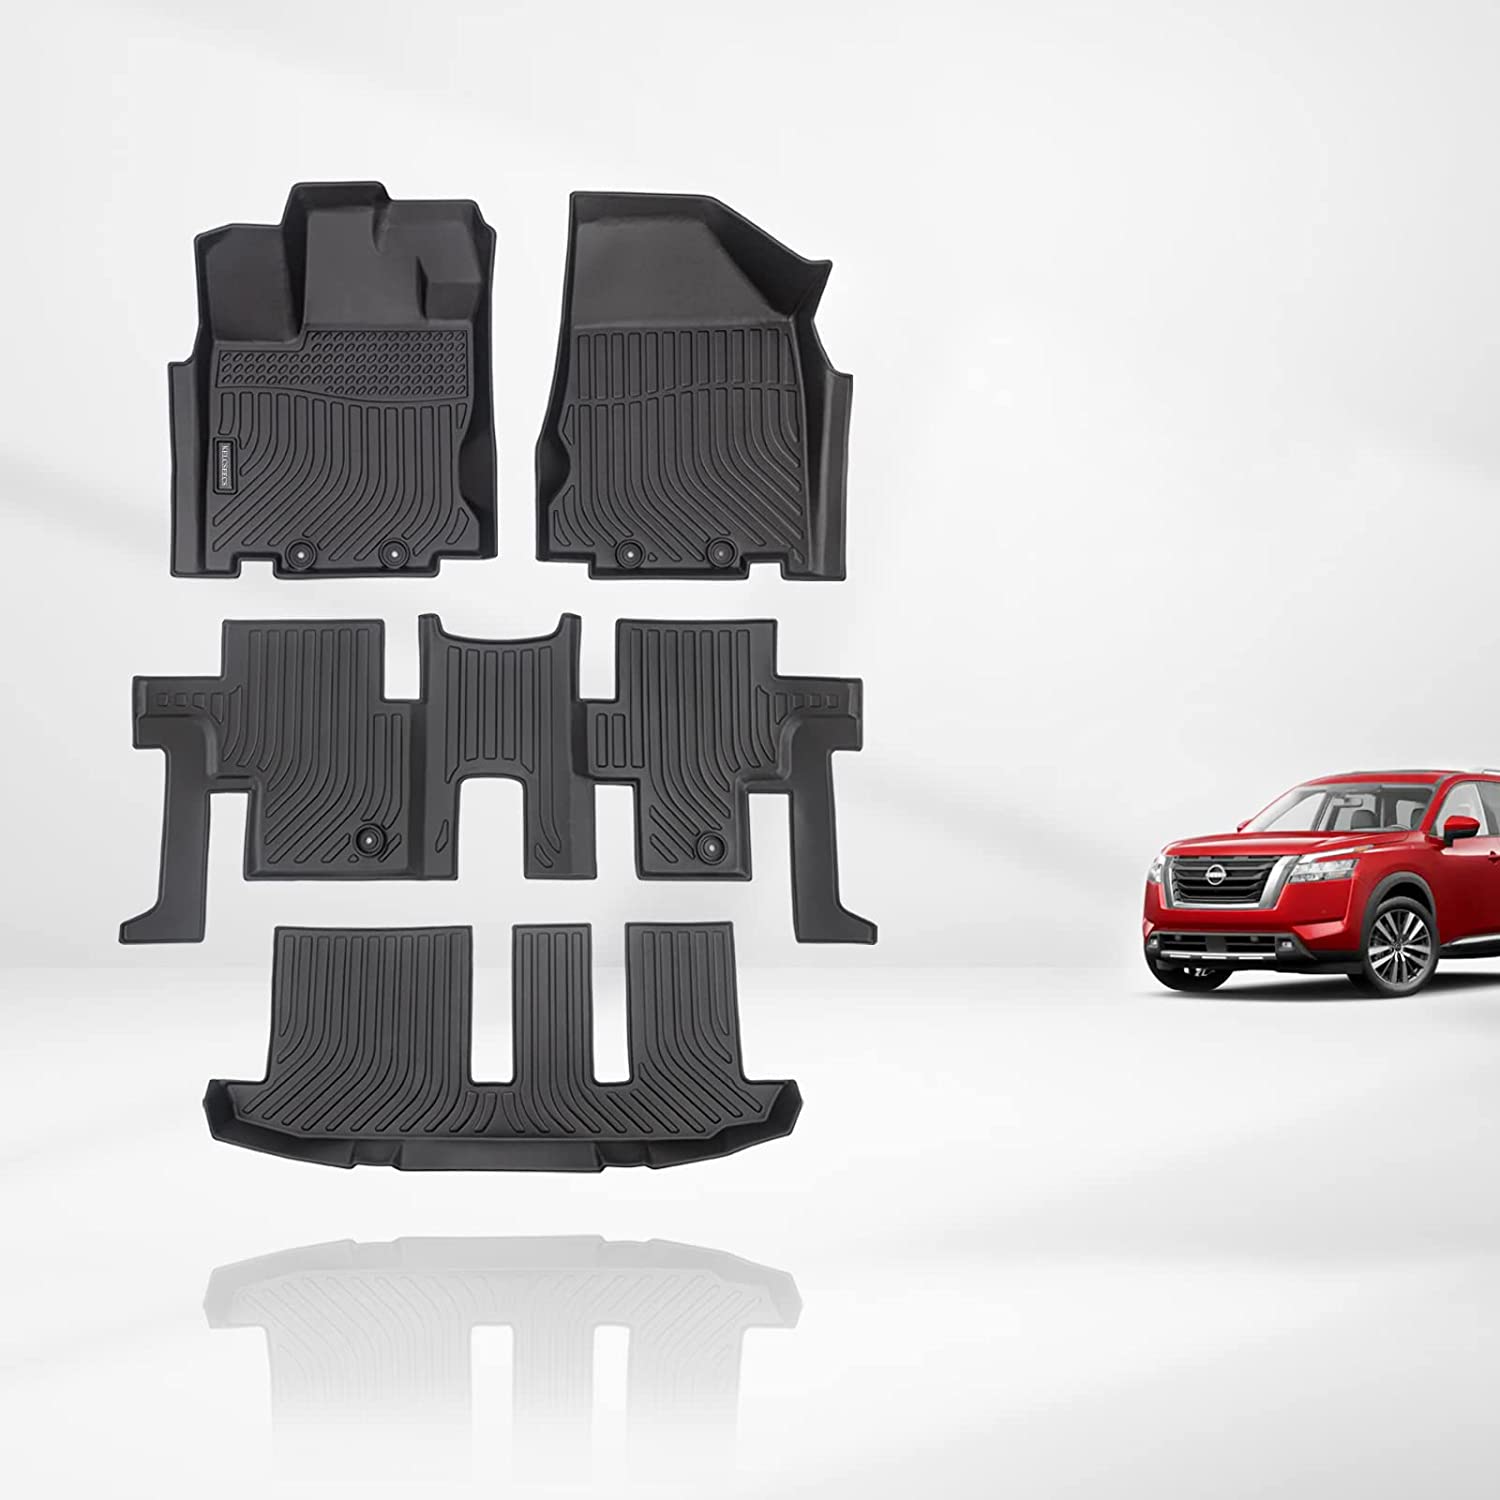 Kelcseecs All Weather 3D Tech Design TPE Car Floor Mats Floor Liners For Nissan Pathfinder 2013-2020